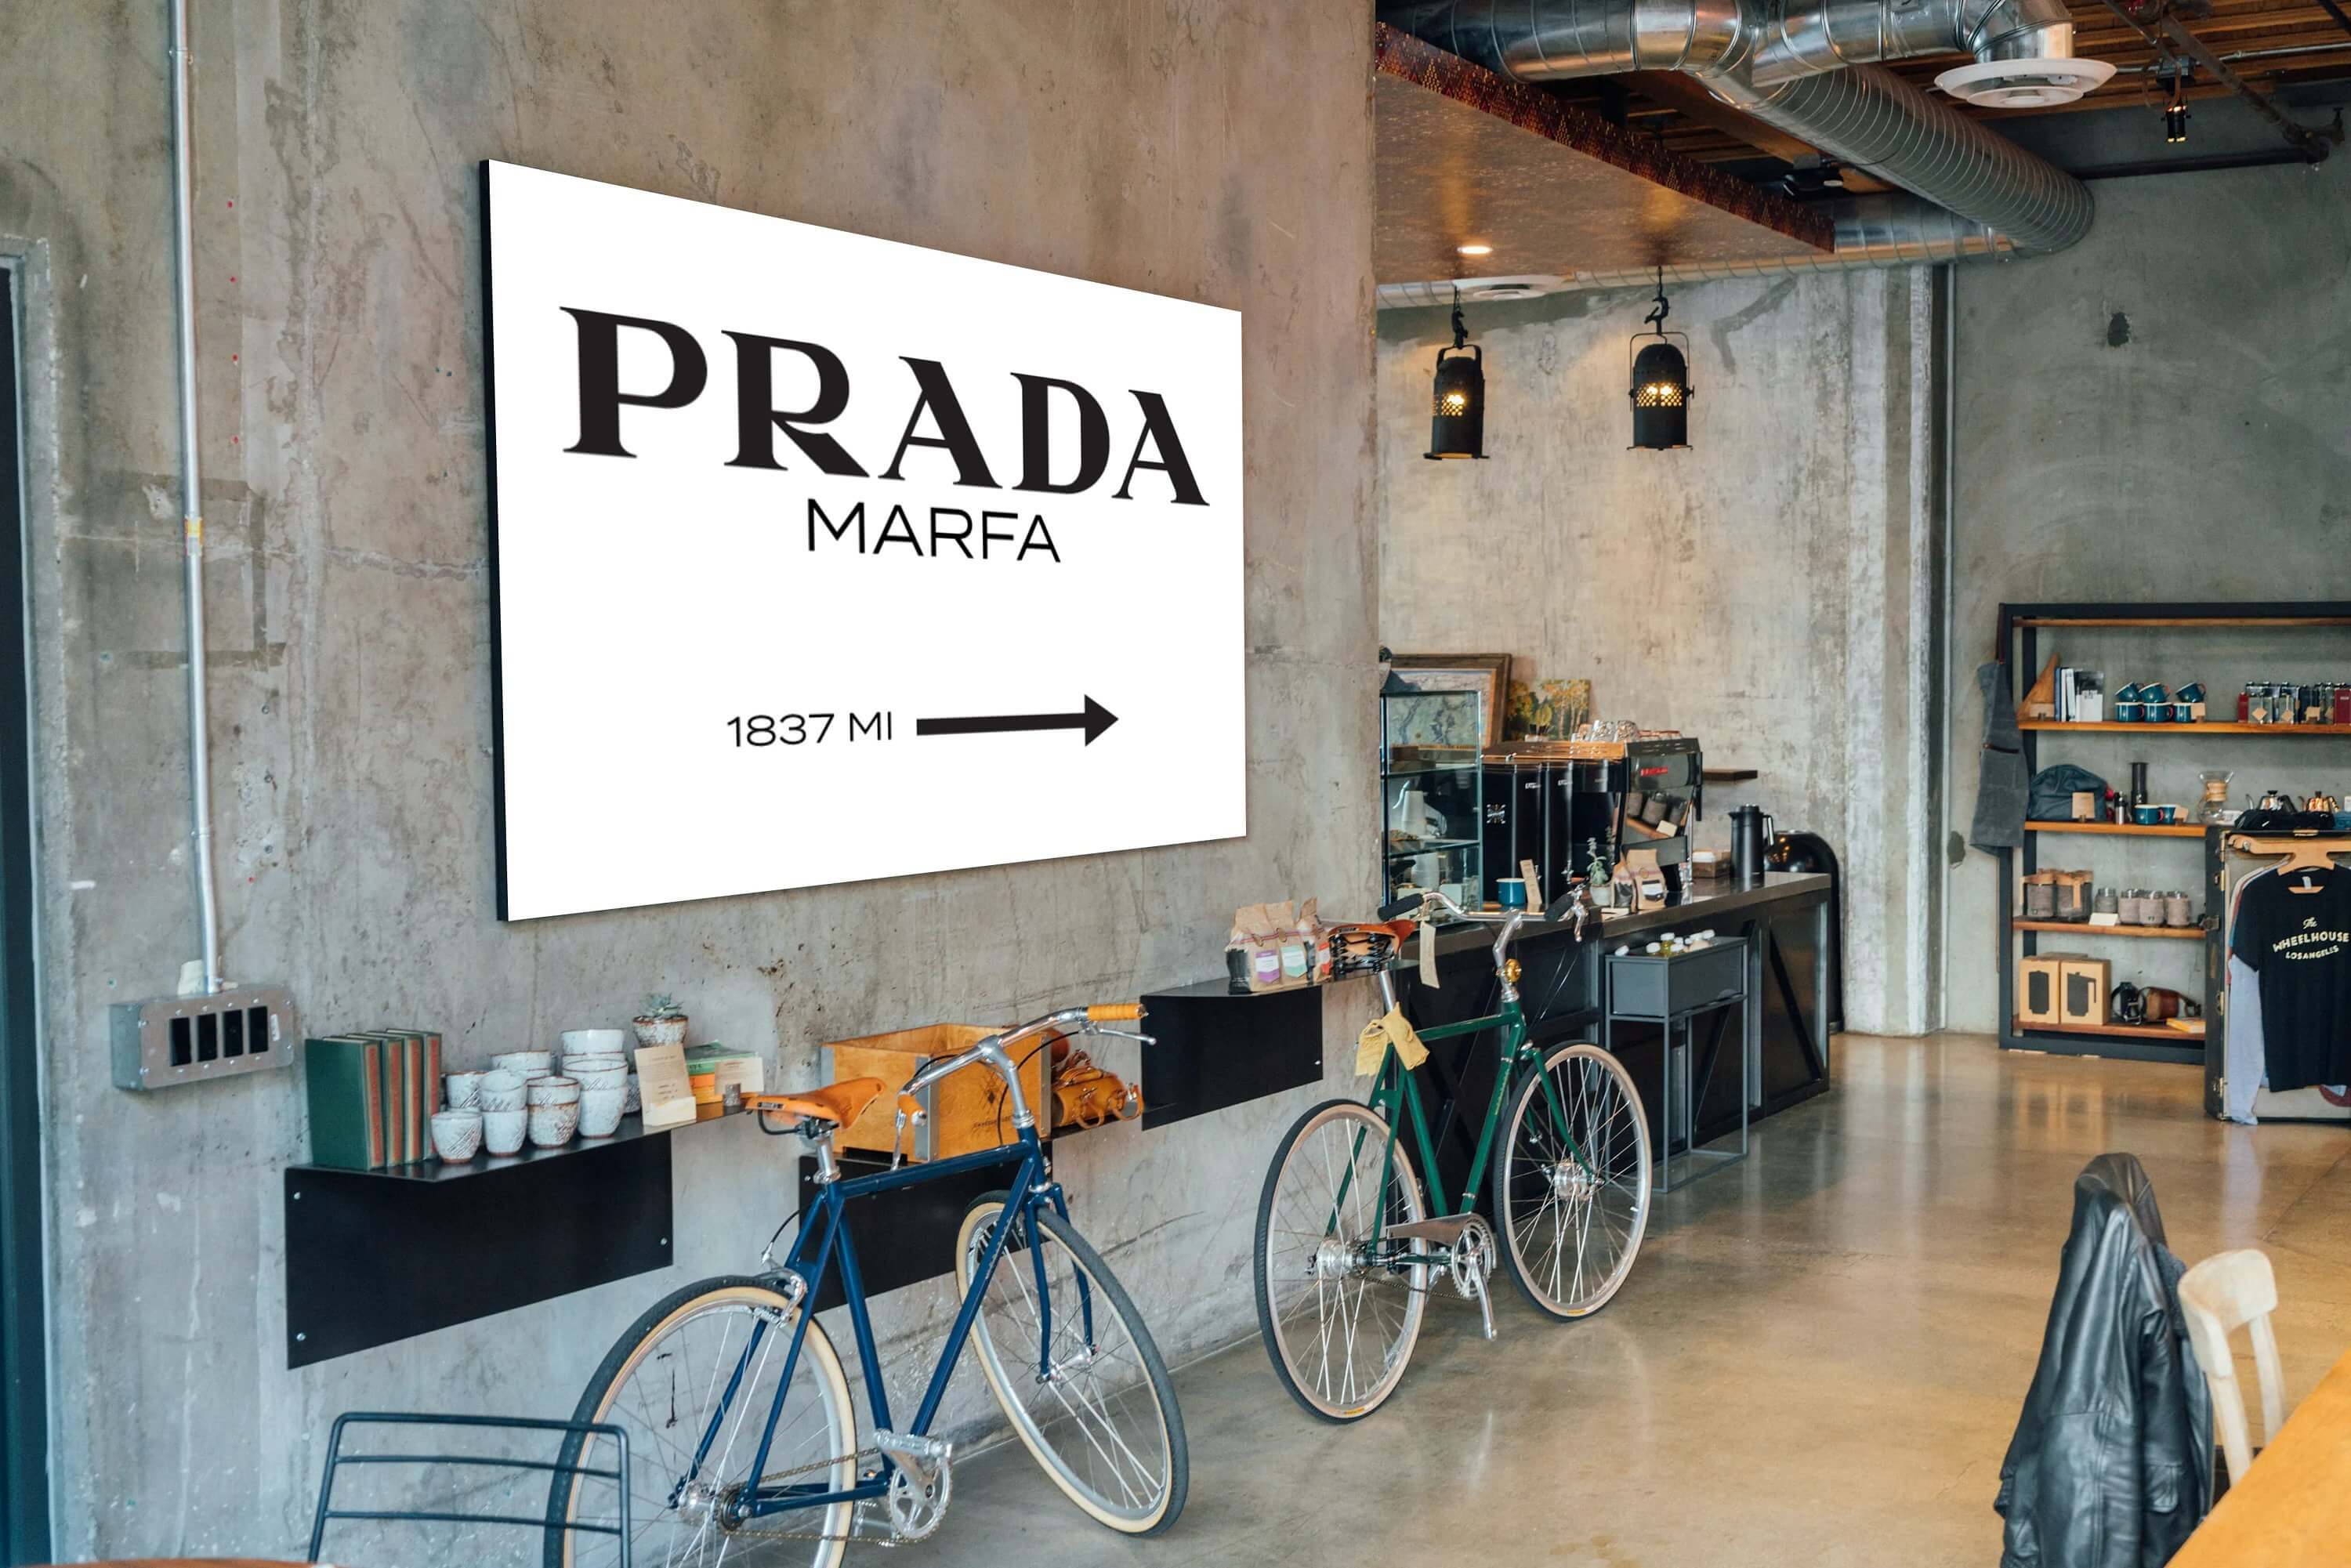 In Defense of the Prada Marfa Sign in 'Gossip Girl' - GARAGE